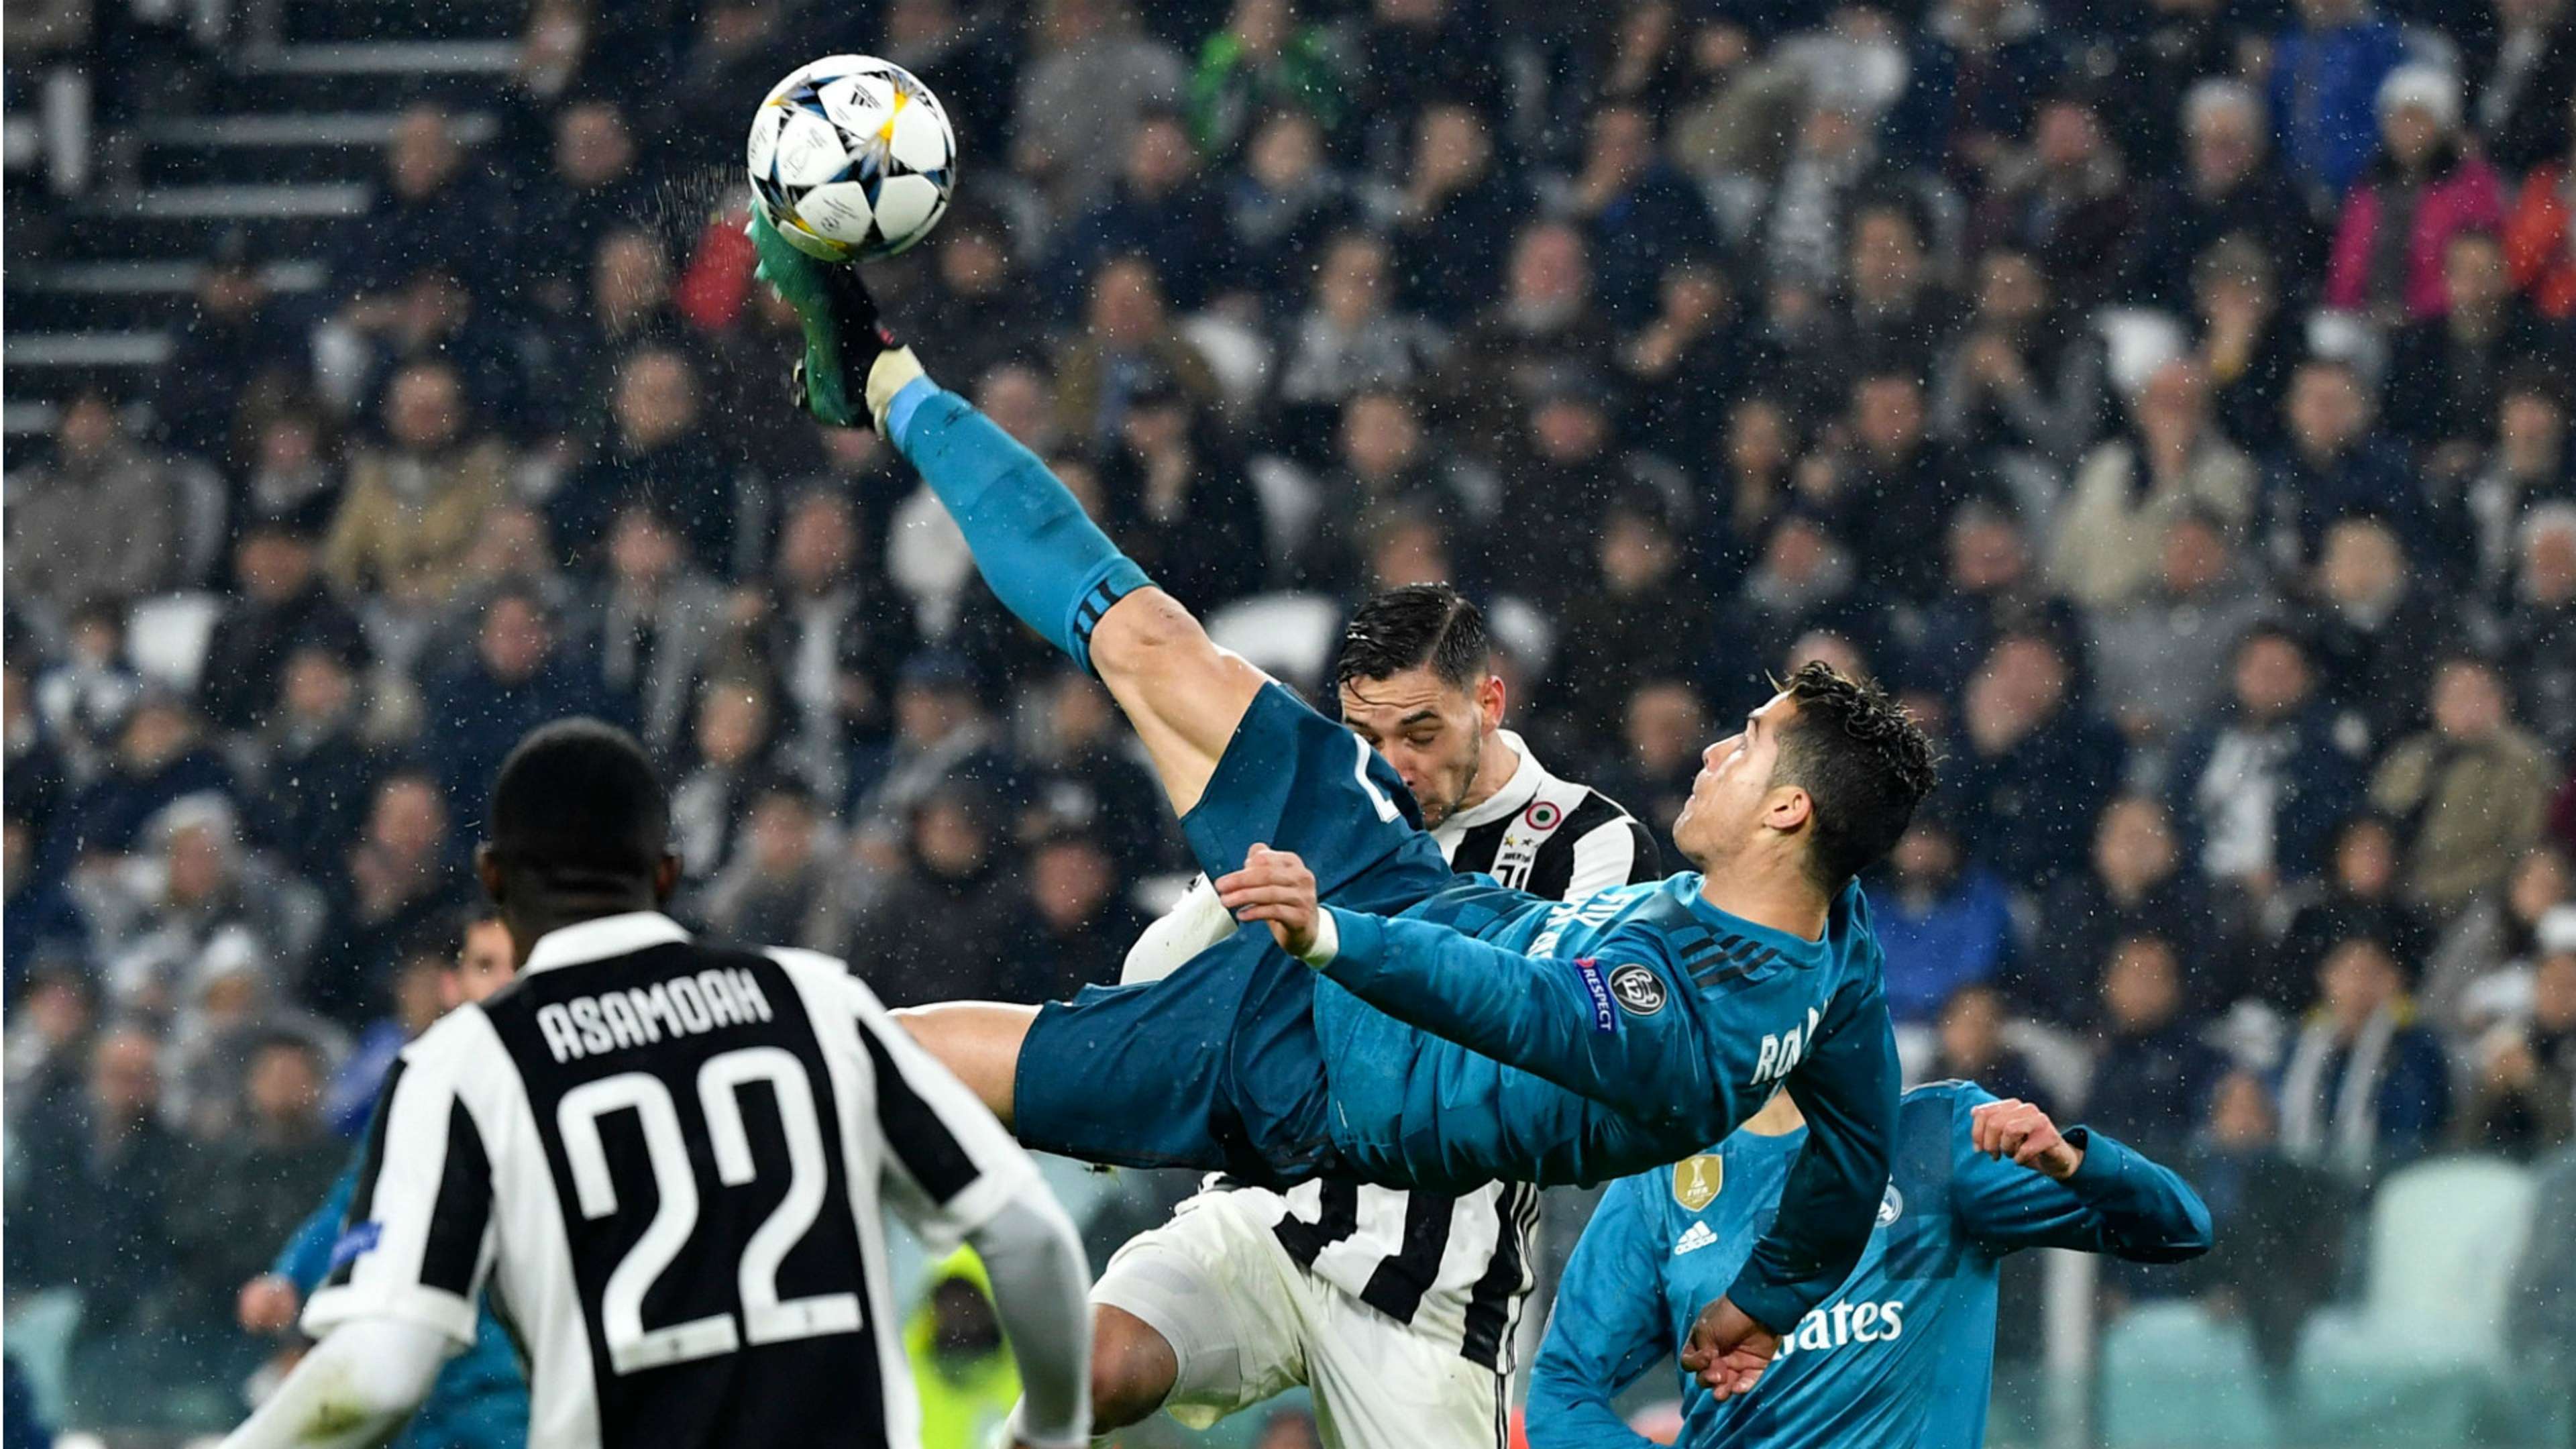 Cristiano Ronaldo Real Madrid Juventus UEFA Champions League Bicycle kick